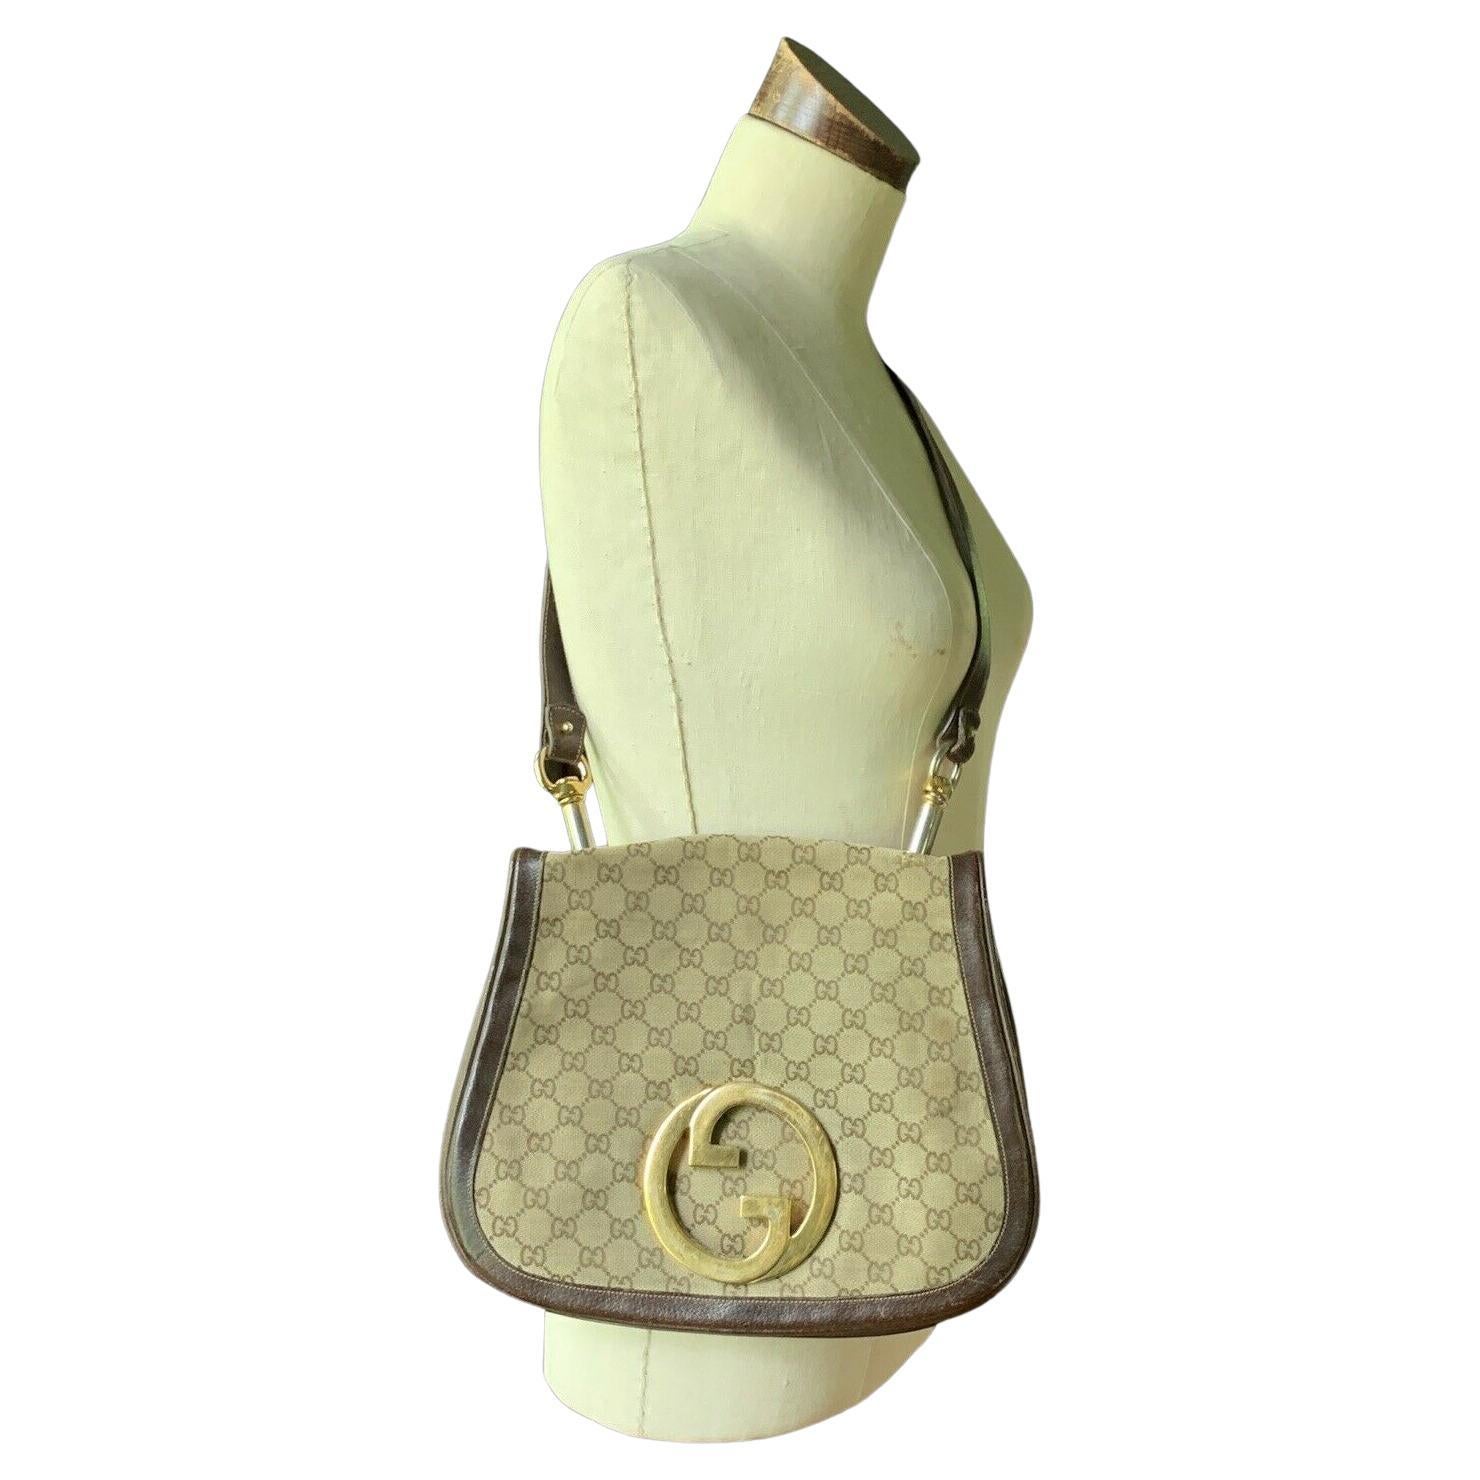 GUCCI Authentic RARE Leather GG Logo VINTAGE 1970s Handbag Purse Crossbody ITALY For Sale